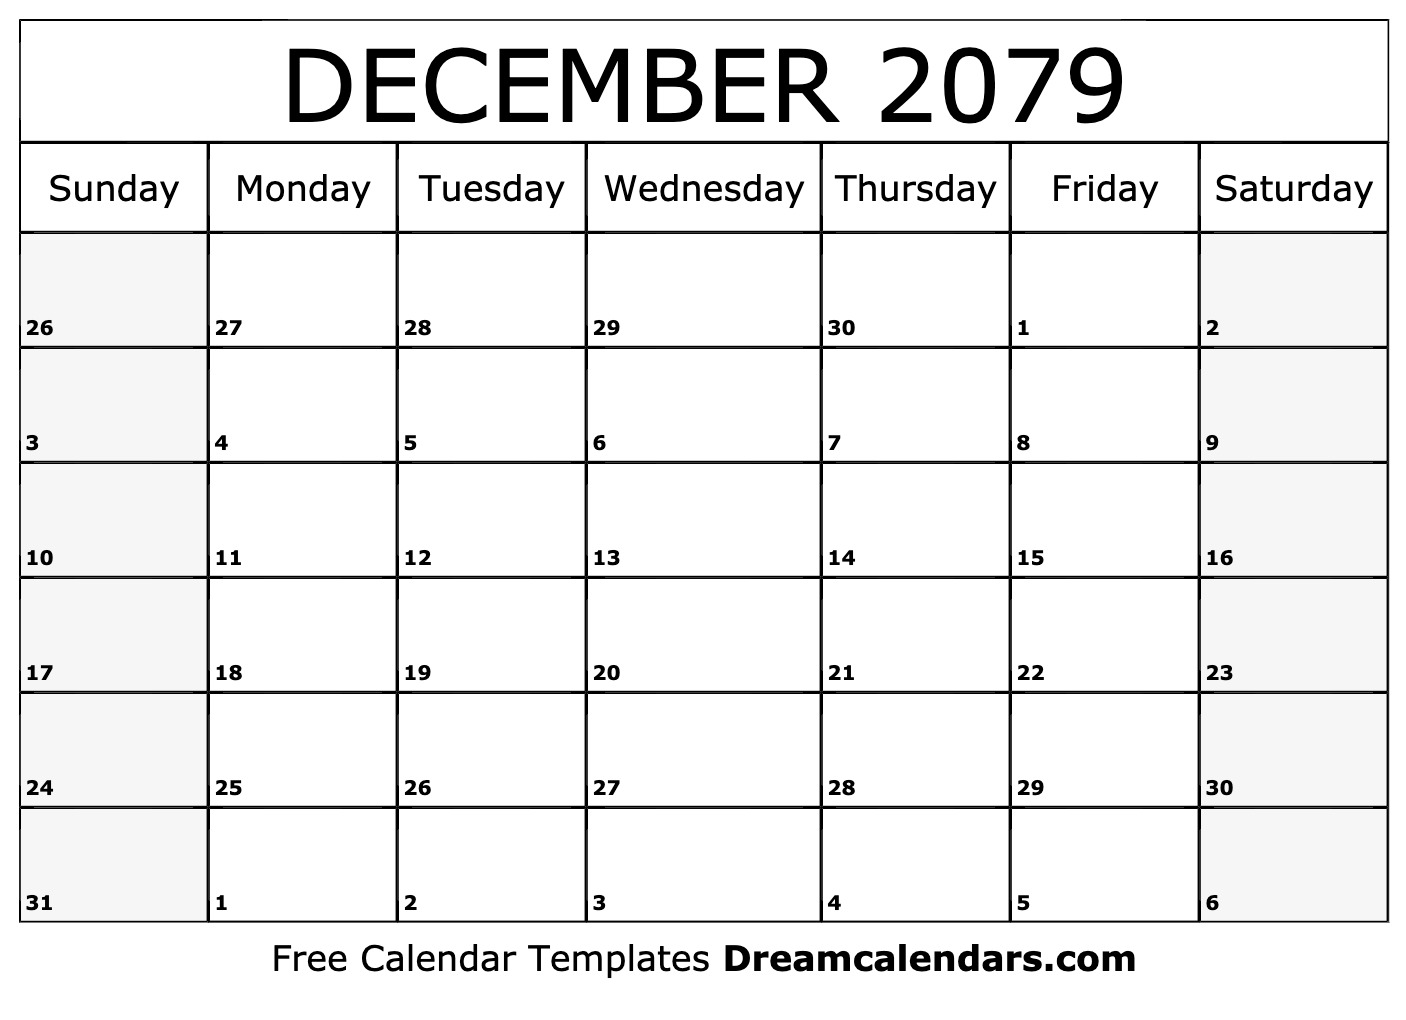 December 2079 calendar | Free blank printable with holidays